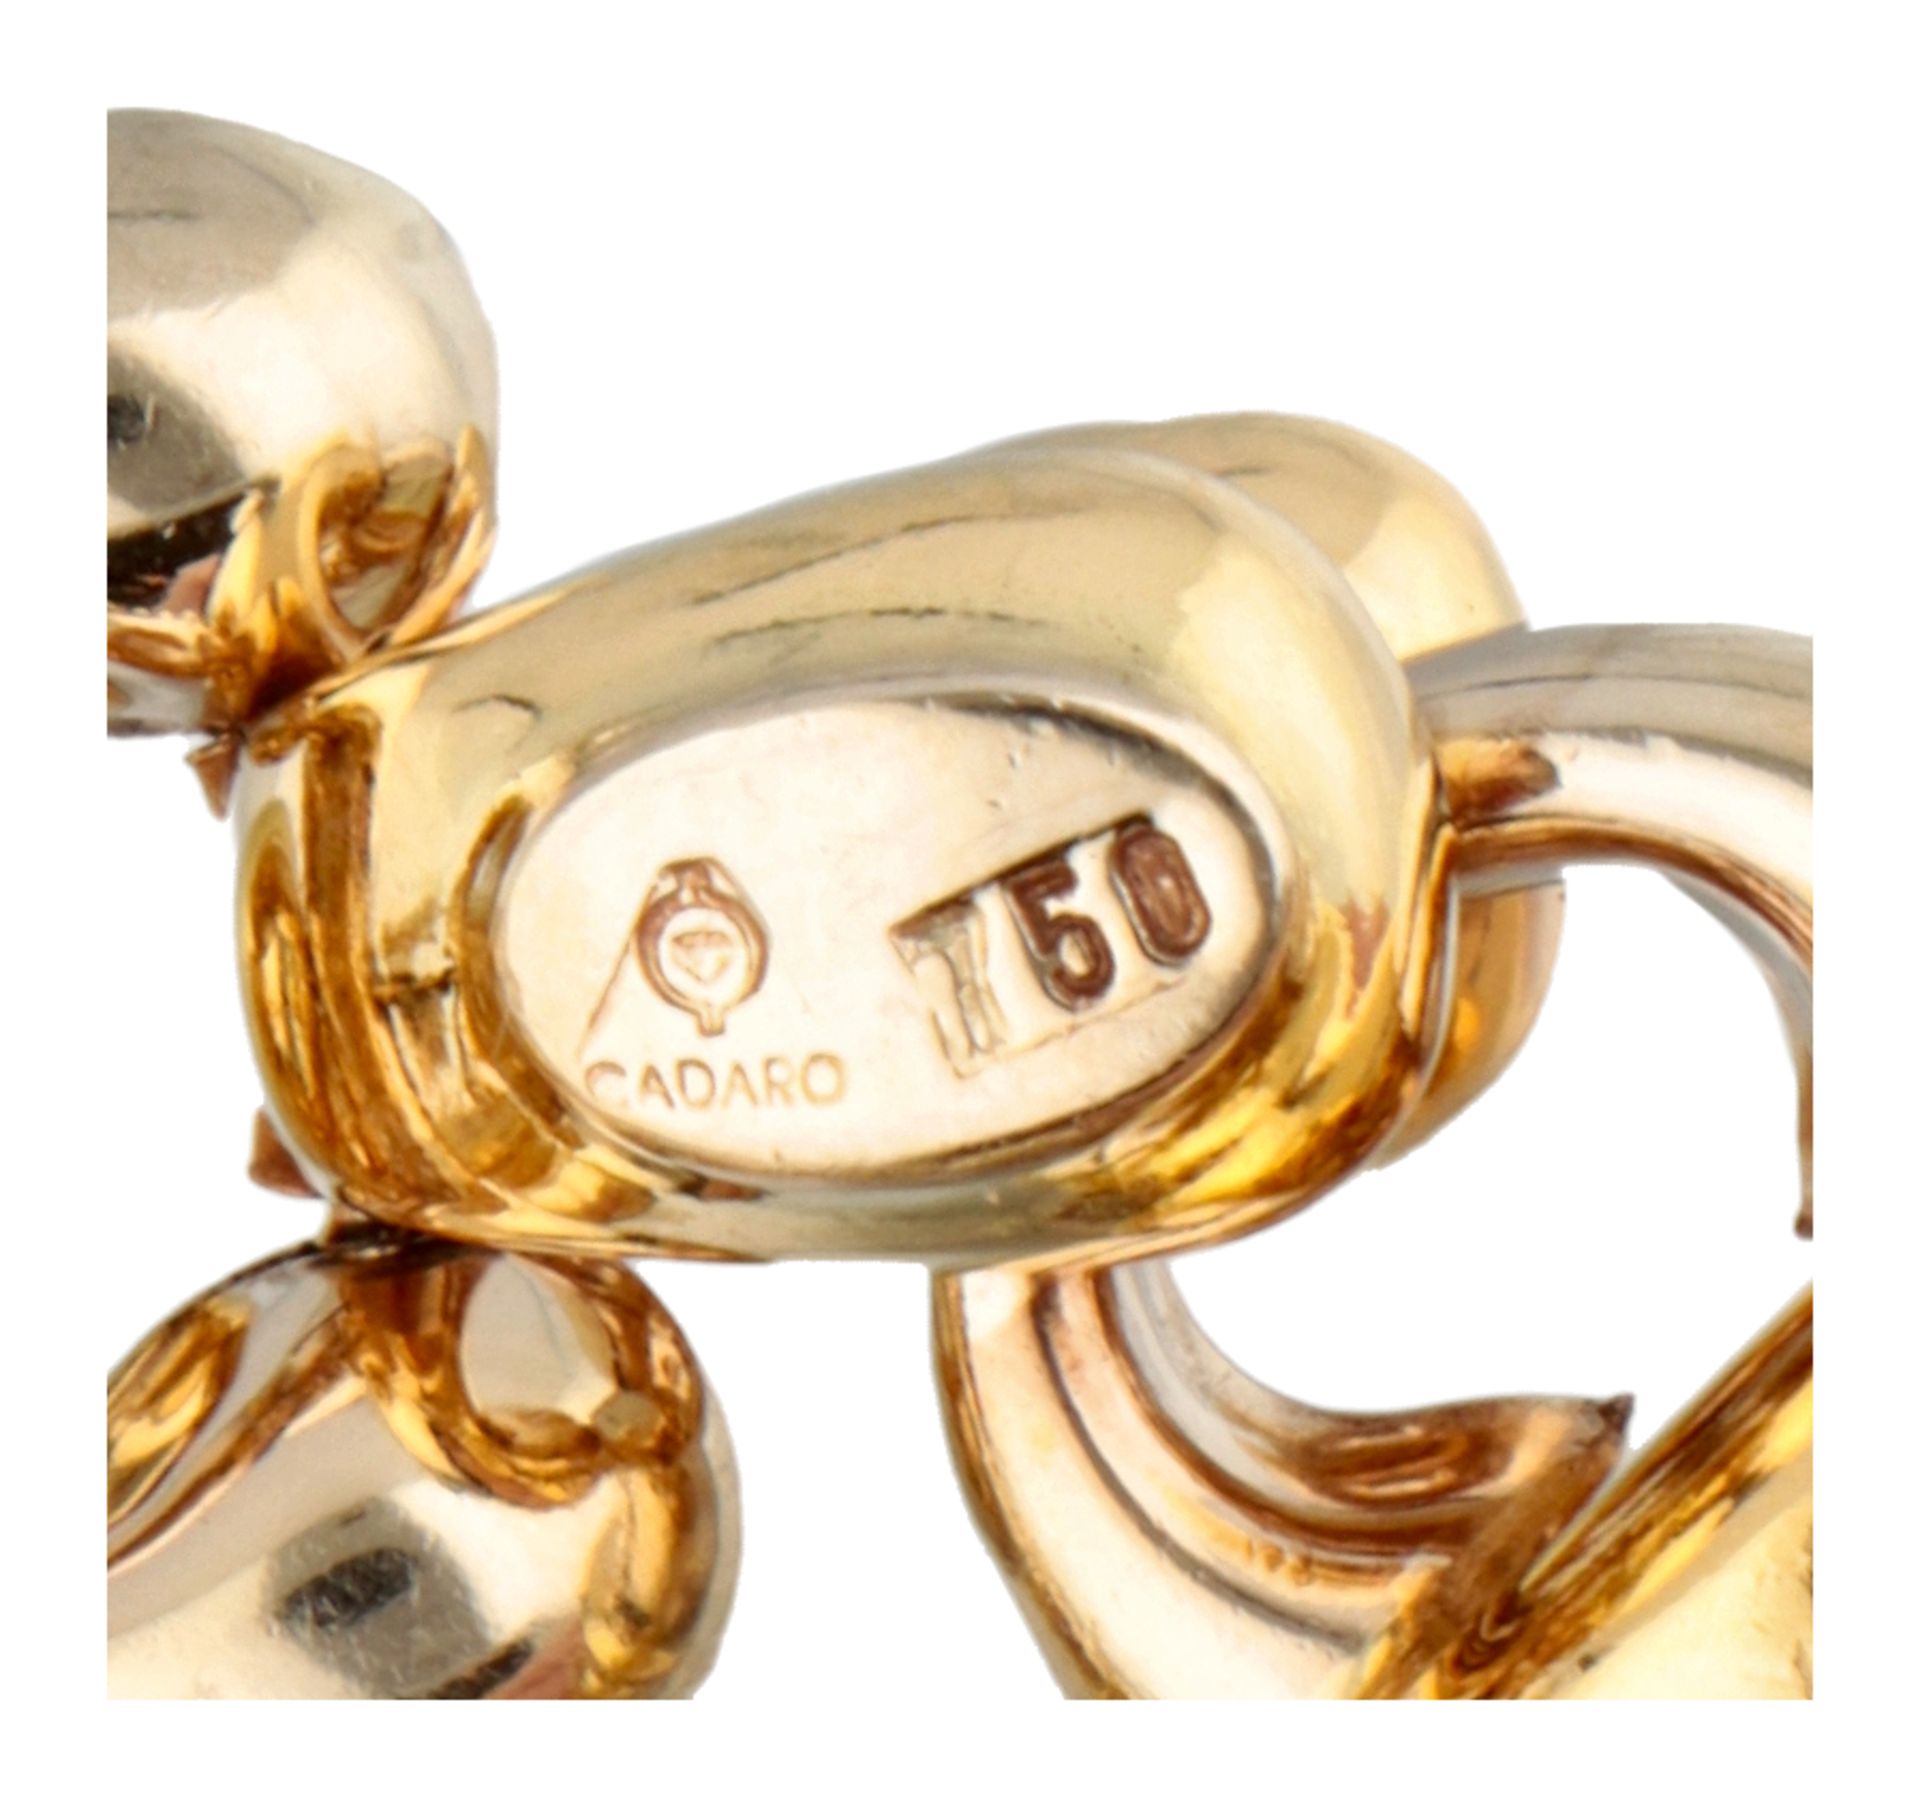 Cadaro 18K bicolour gold link bracelet. - Image 4 of 4